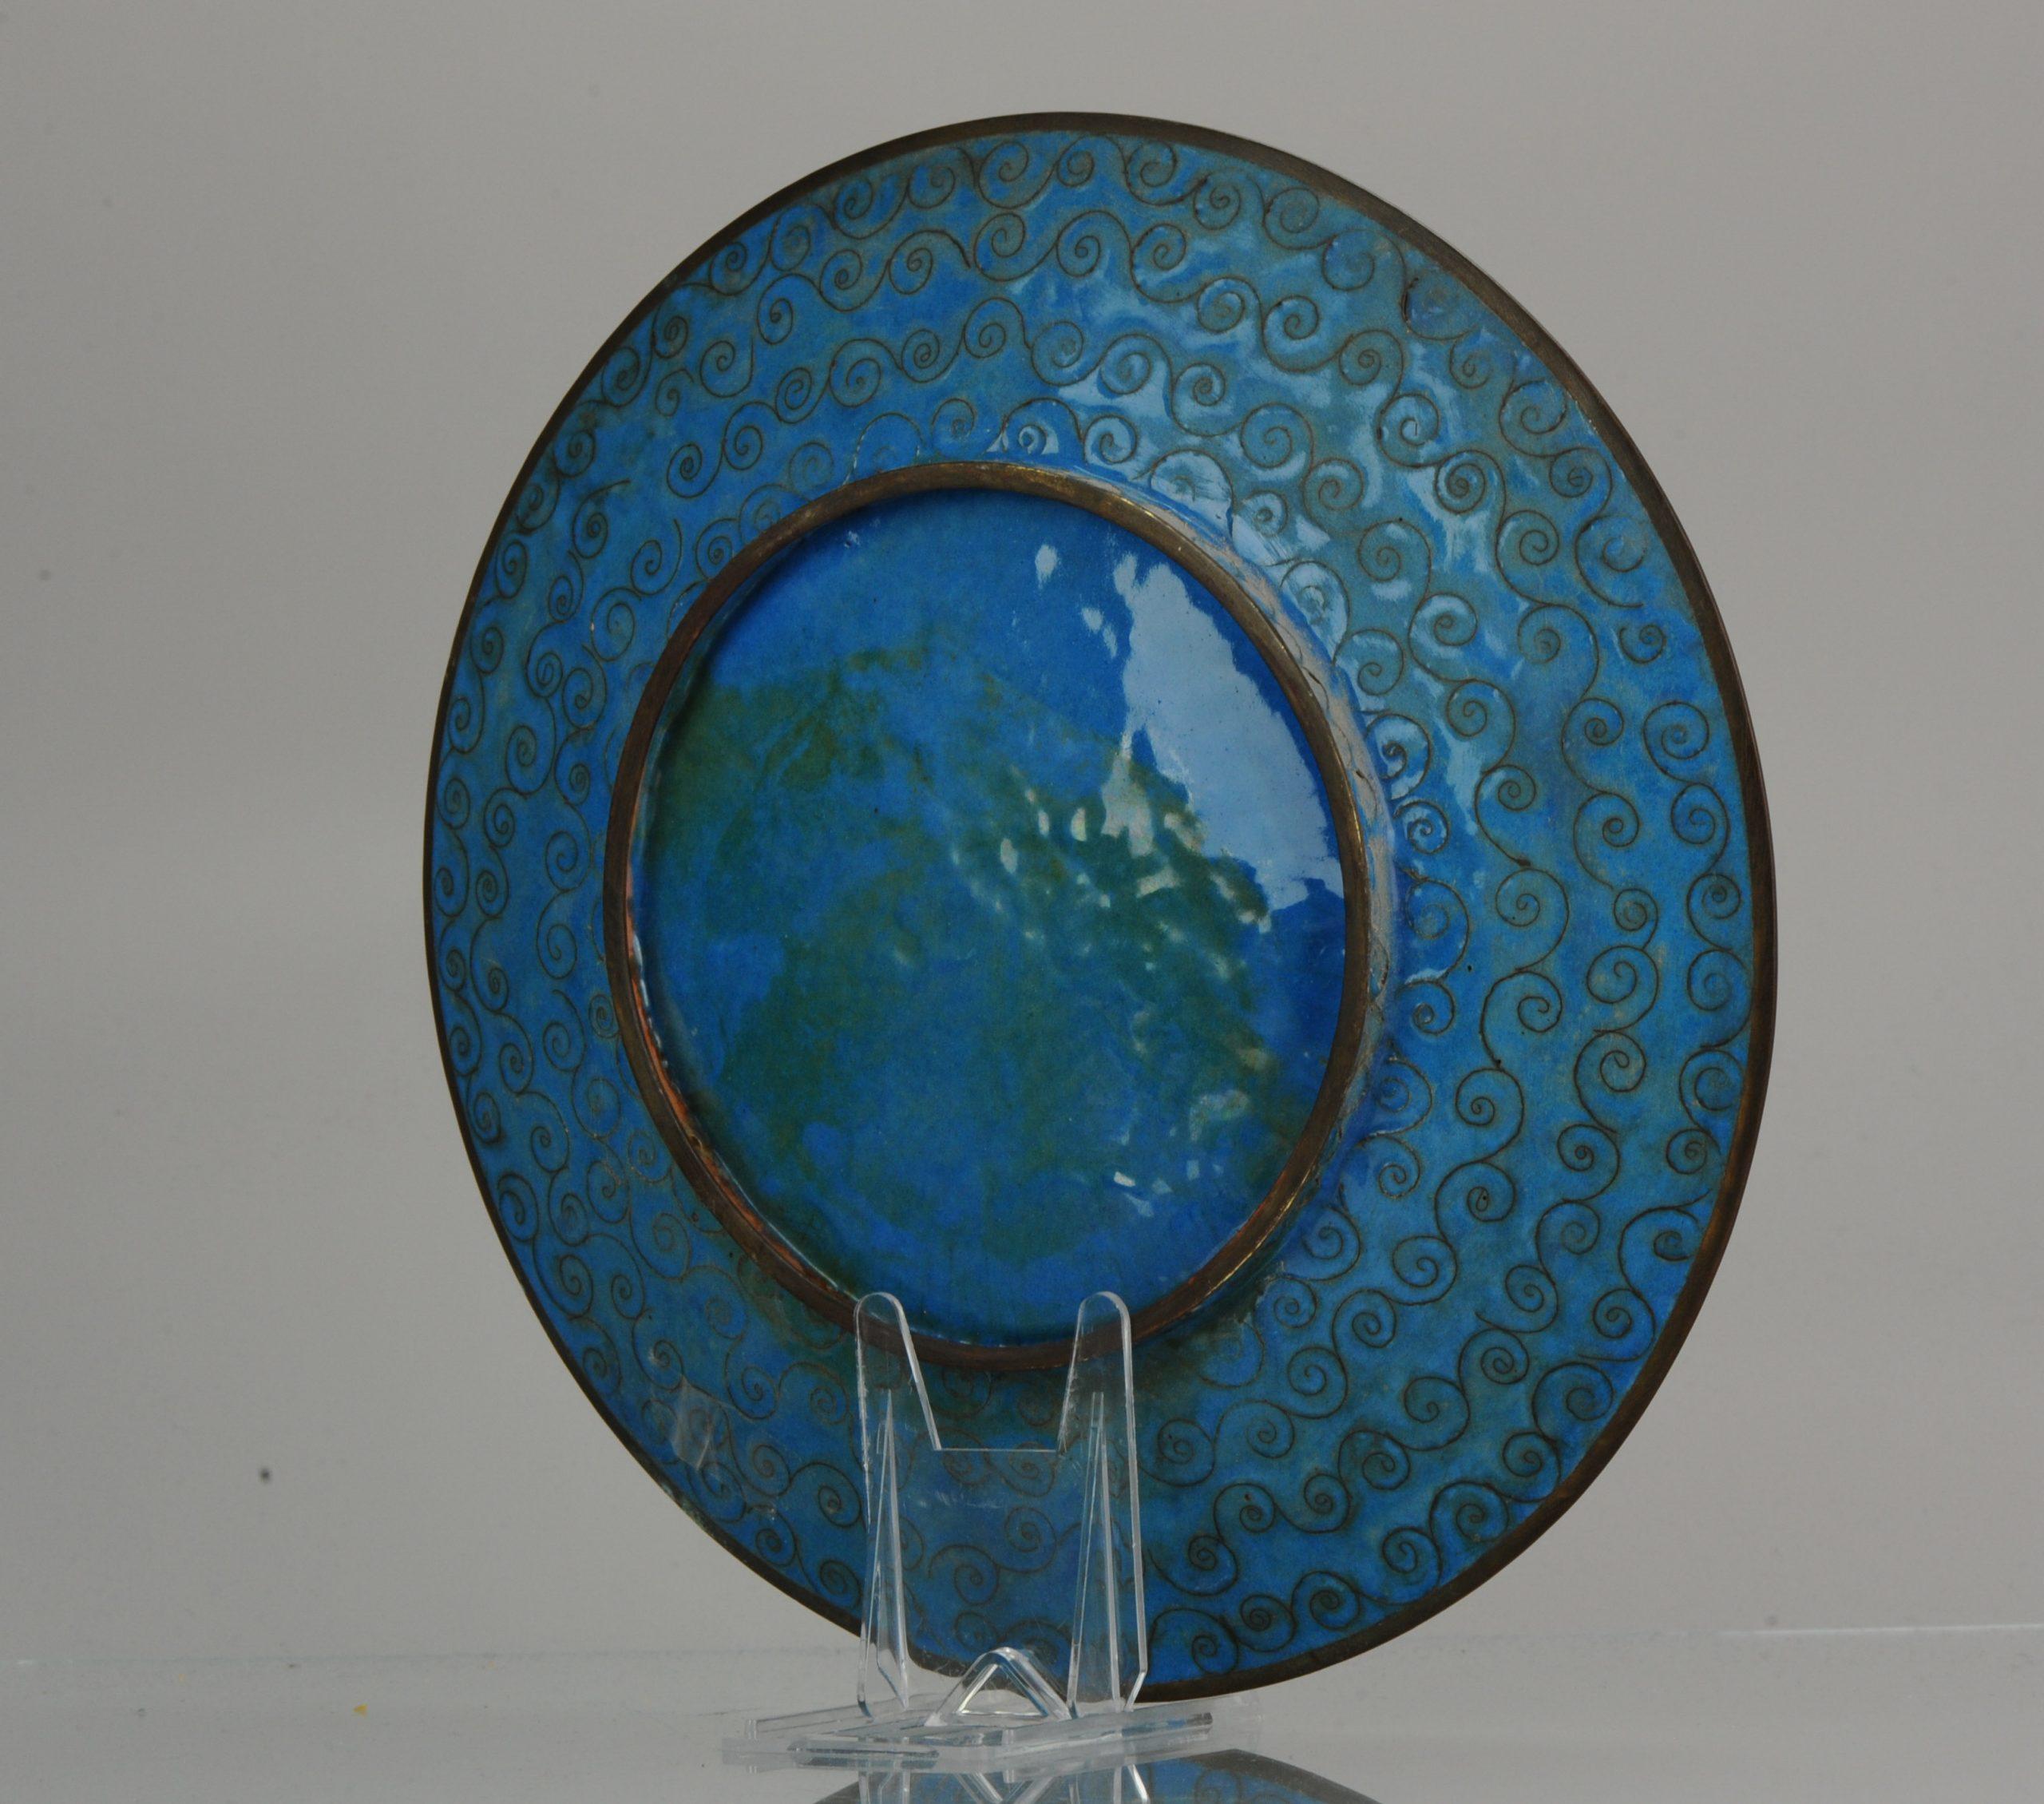 Top and Large Antique Bronze/Copper Cloisonné Dish Plate Japan 19th Century Bird For Sale 3